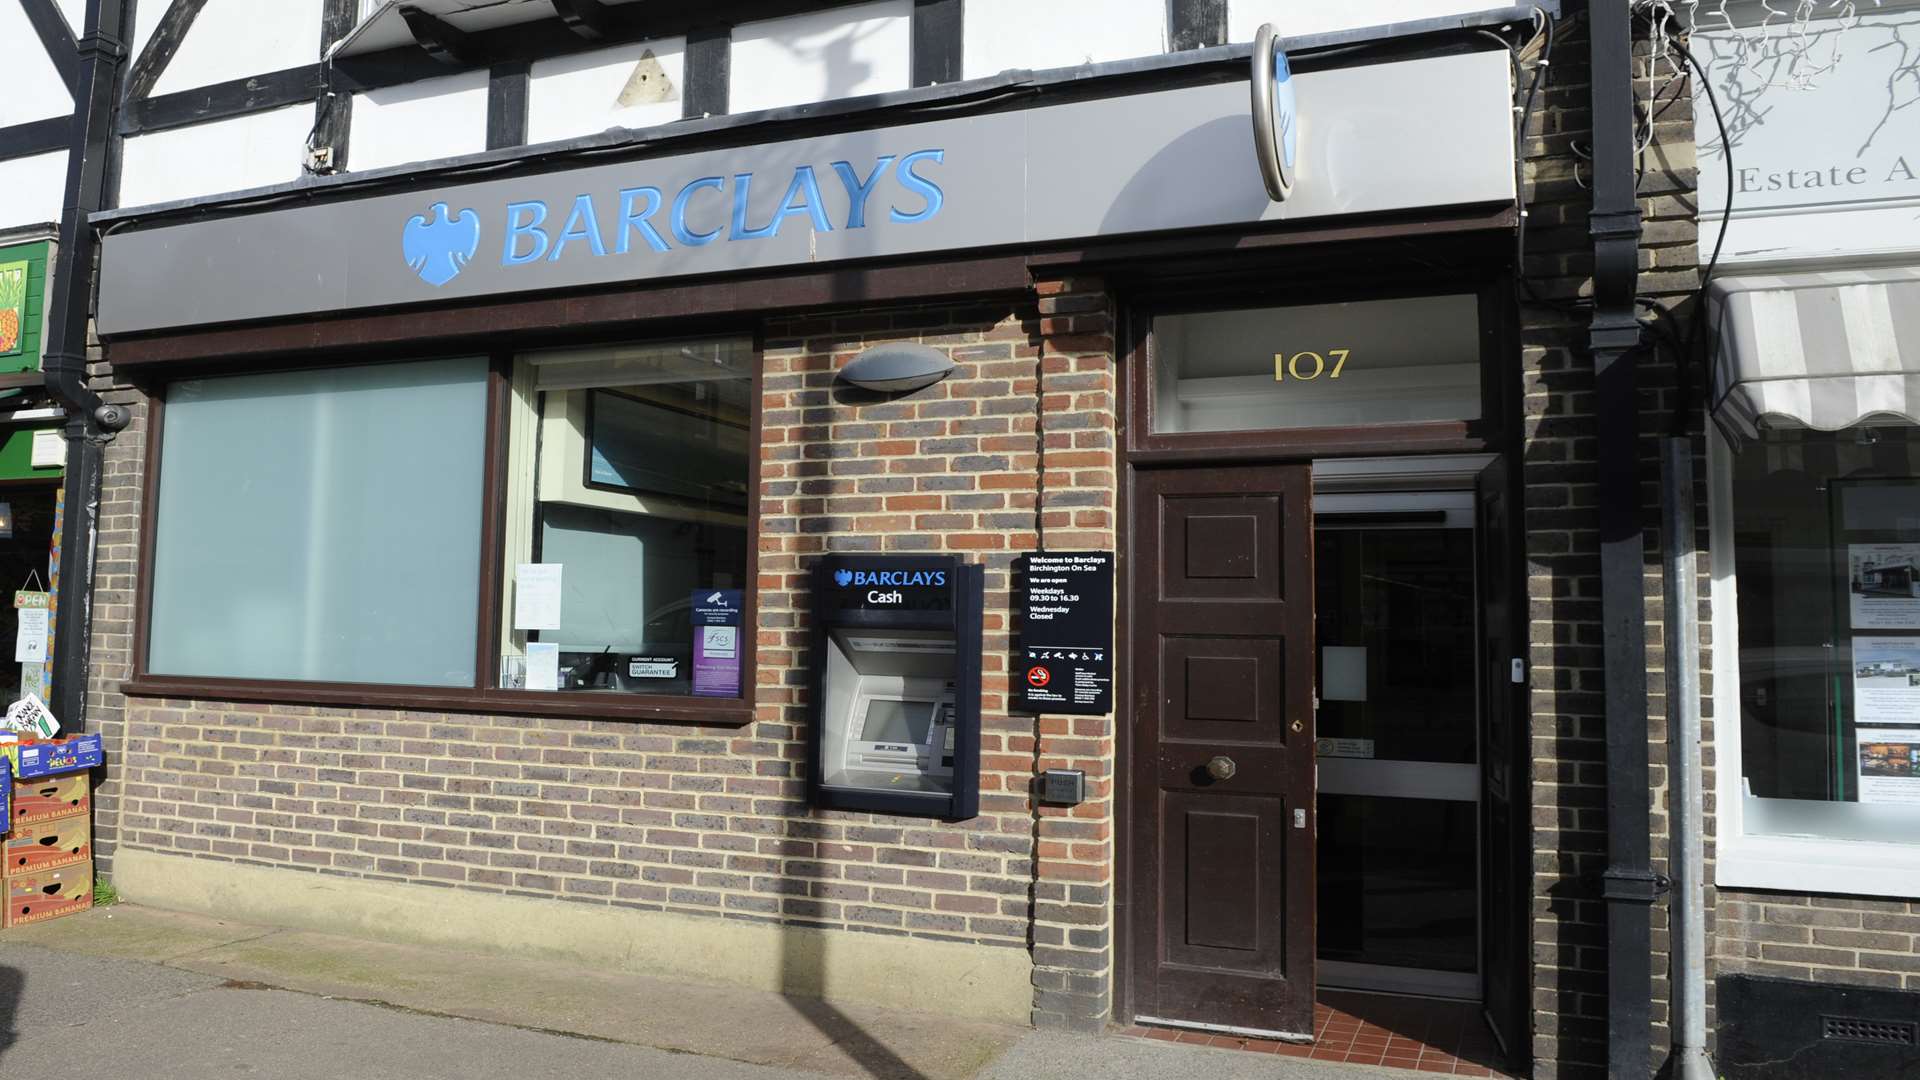 Barclays bank in Birchington is set to close next week.